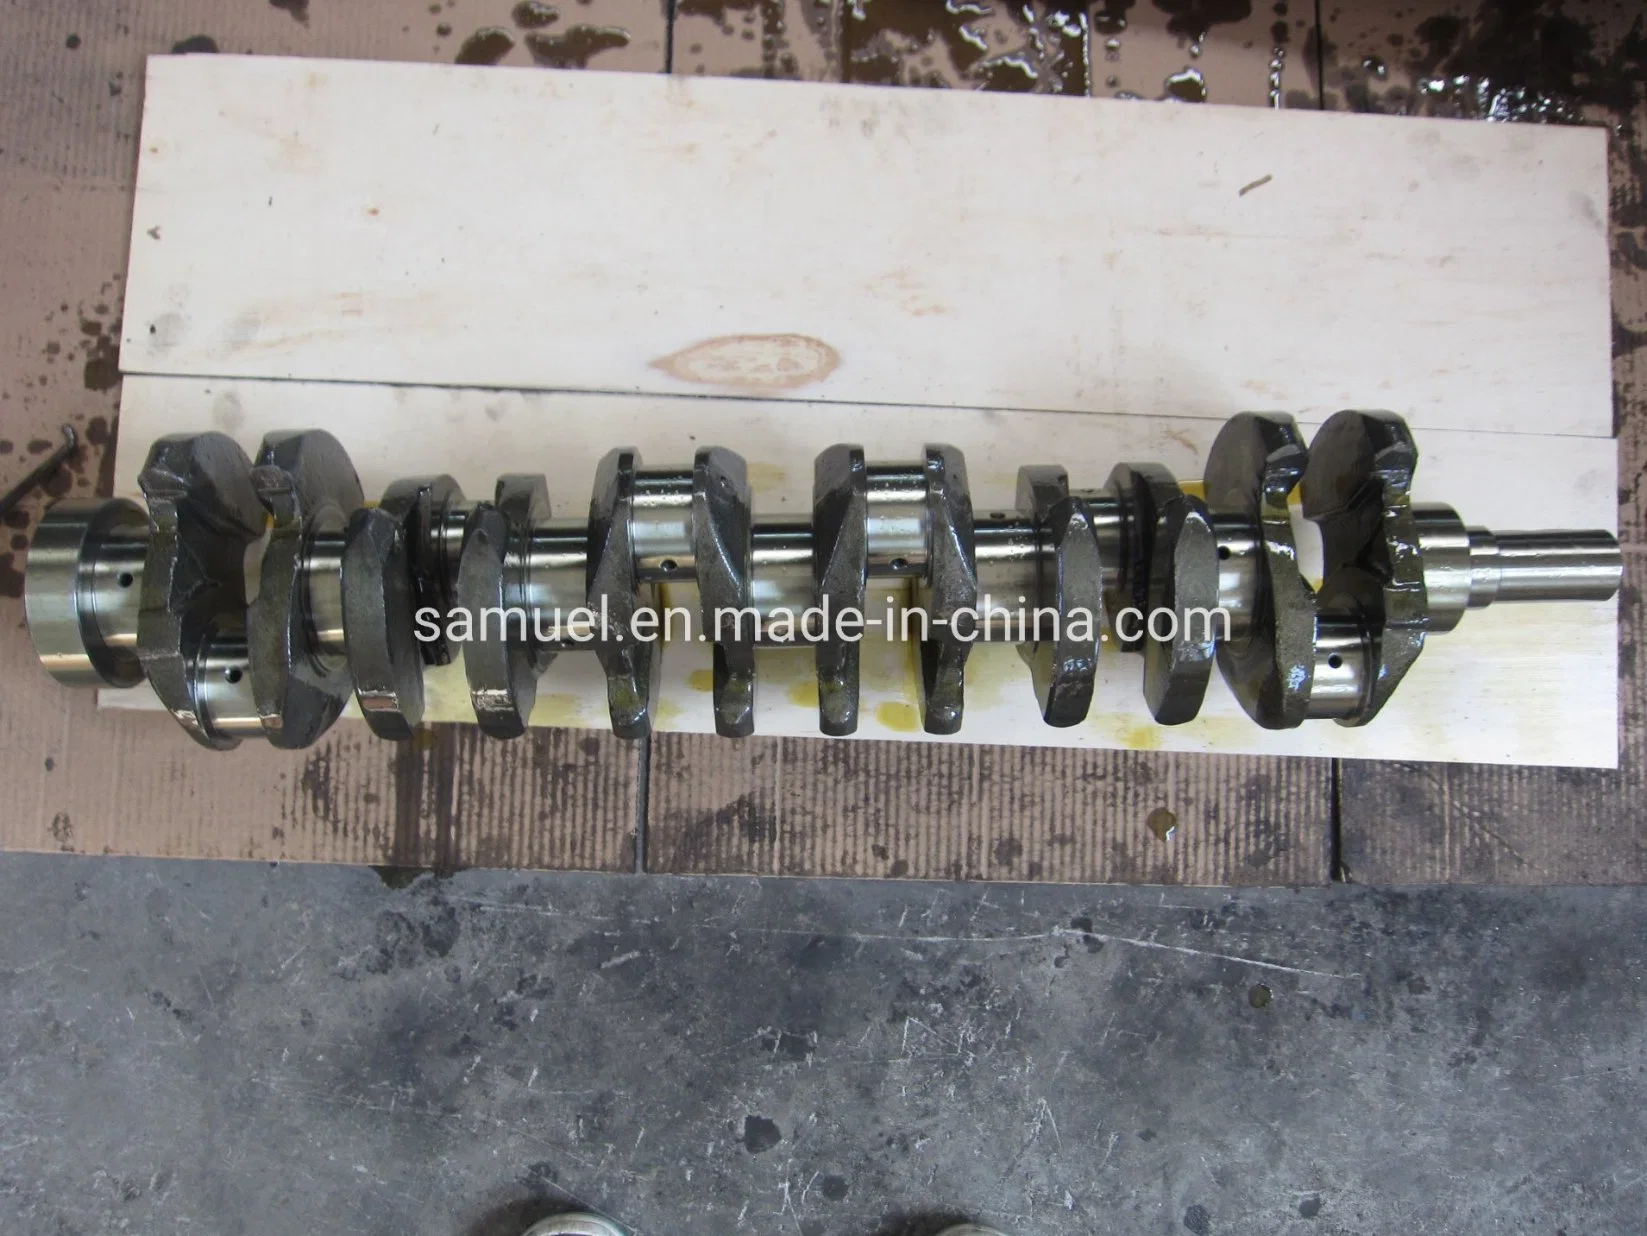 Auto Parts Crankshaft for Toyota 1fz for Car Gasoline Engine OEM 13401-66021 Factory Price